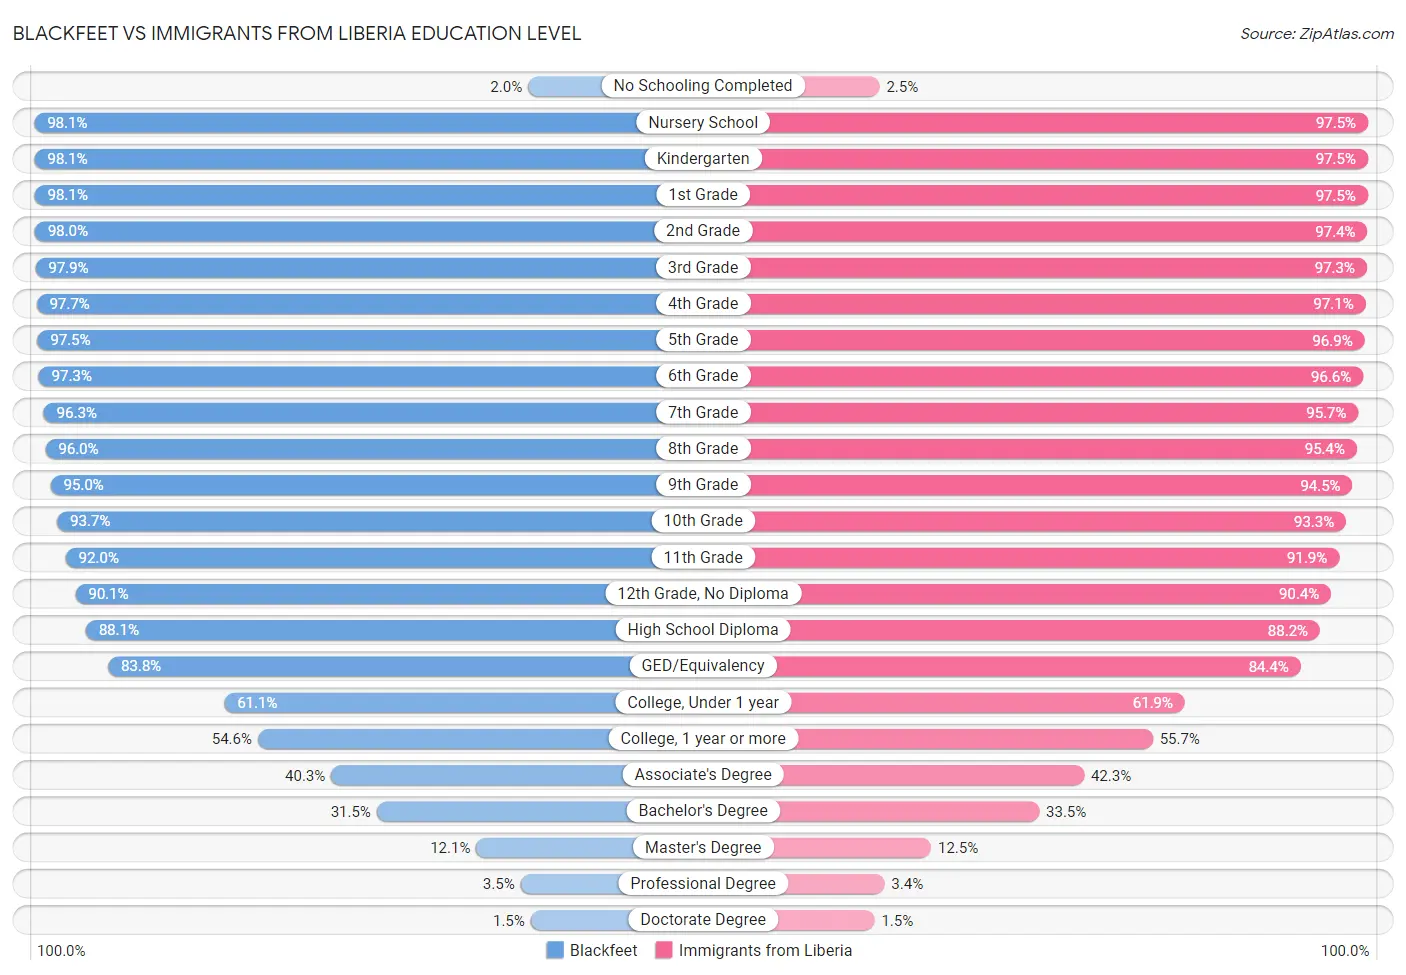 Blackfeet vs Immigrants from Liberia Education Level